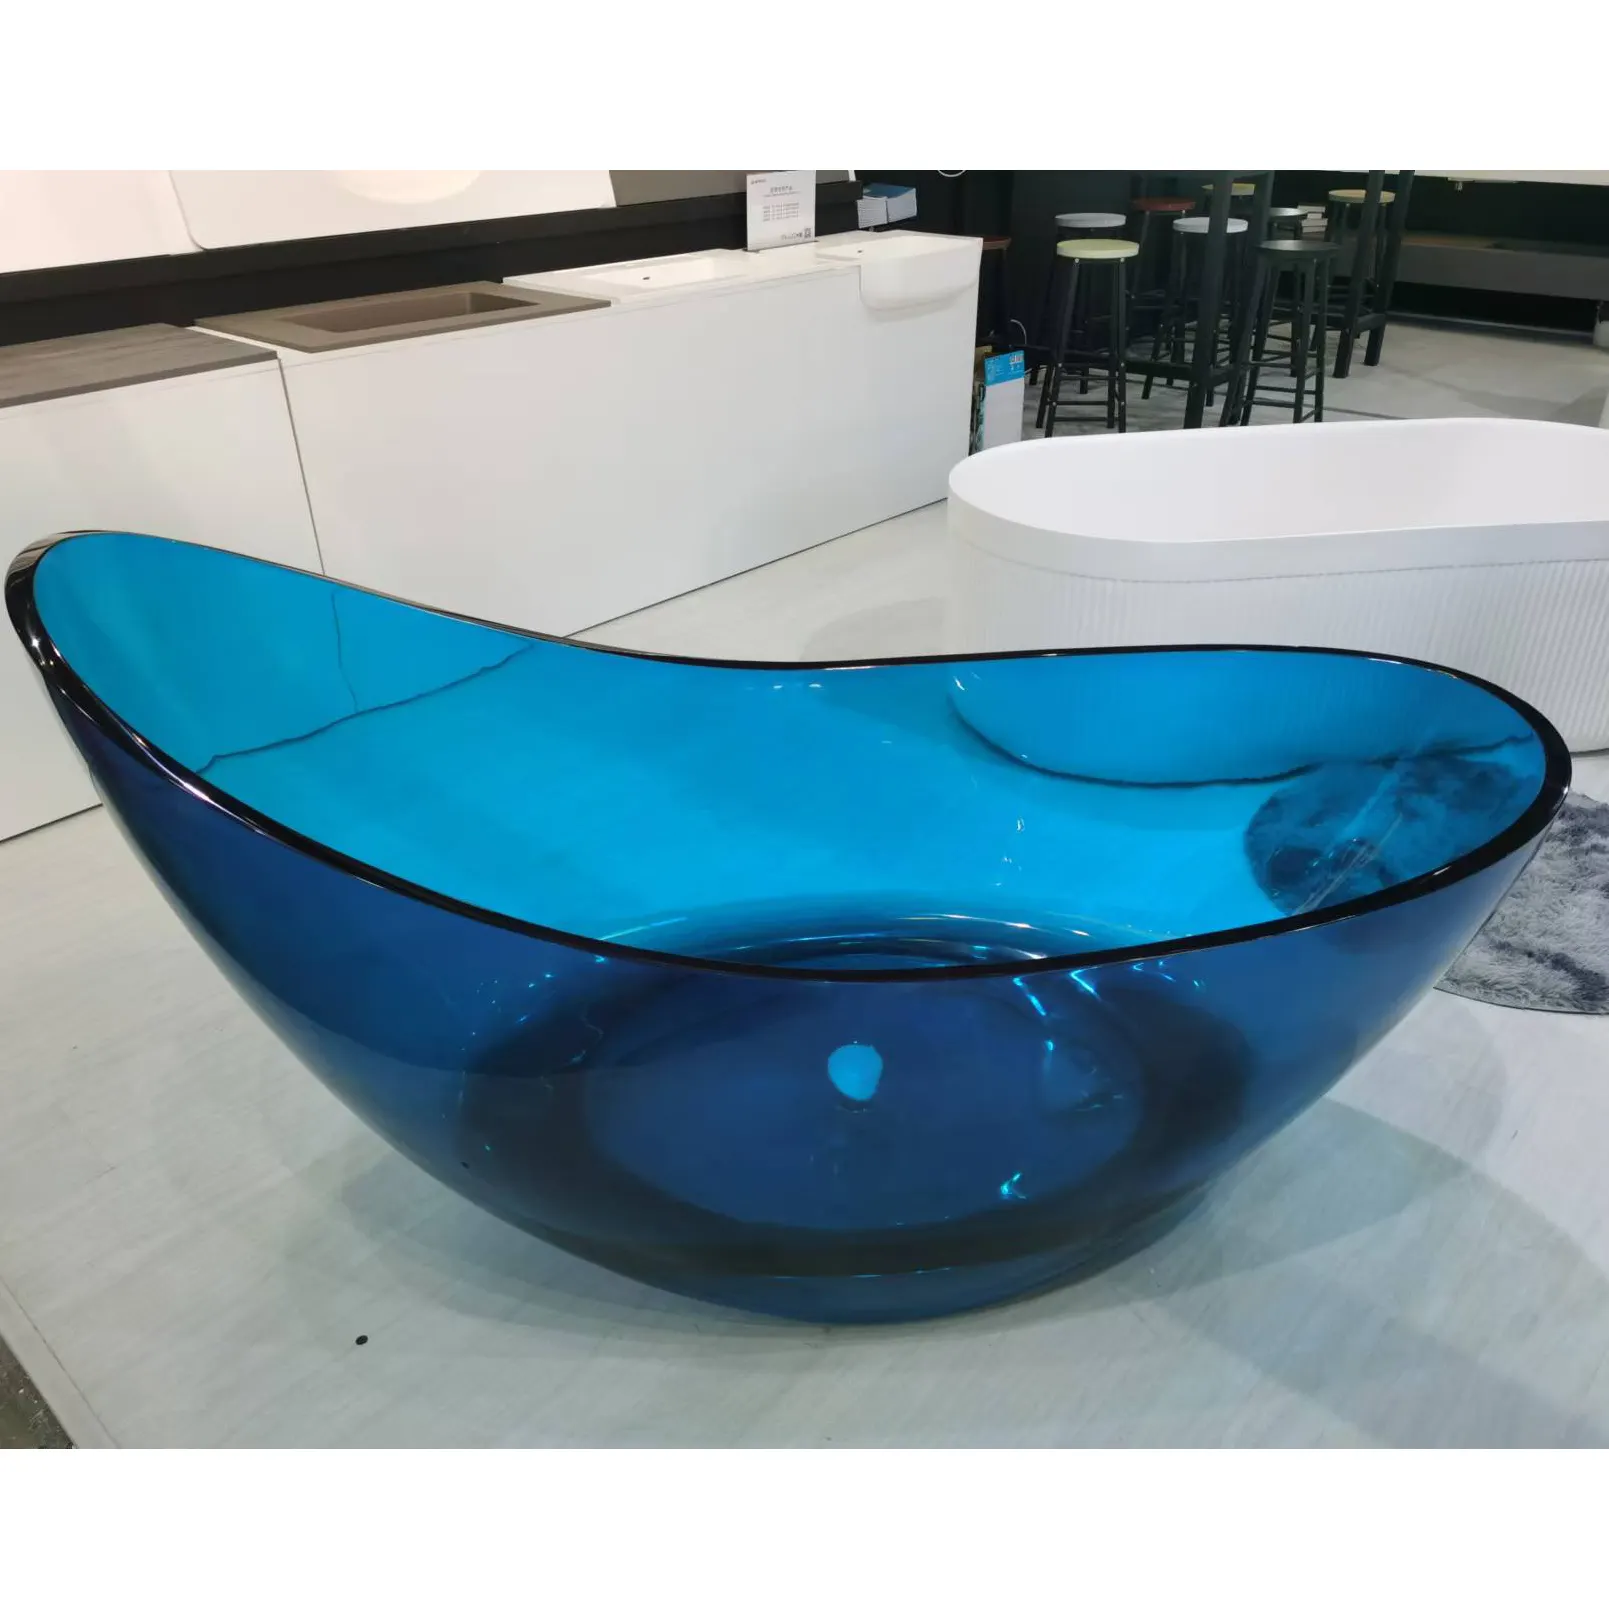 Bañeras independientes de resina transparente de color azul, bañera transparente de poliéster para adultos